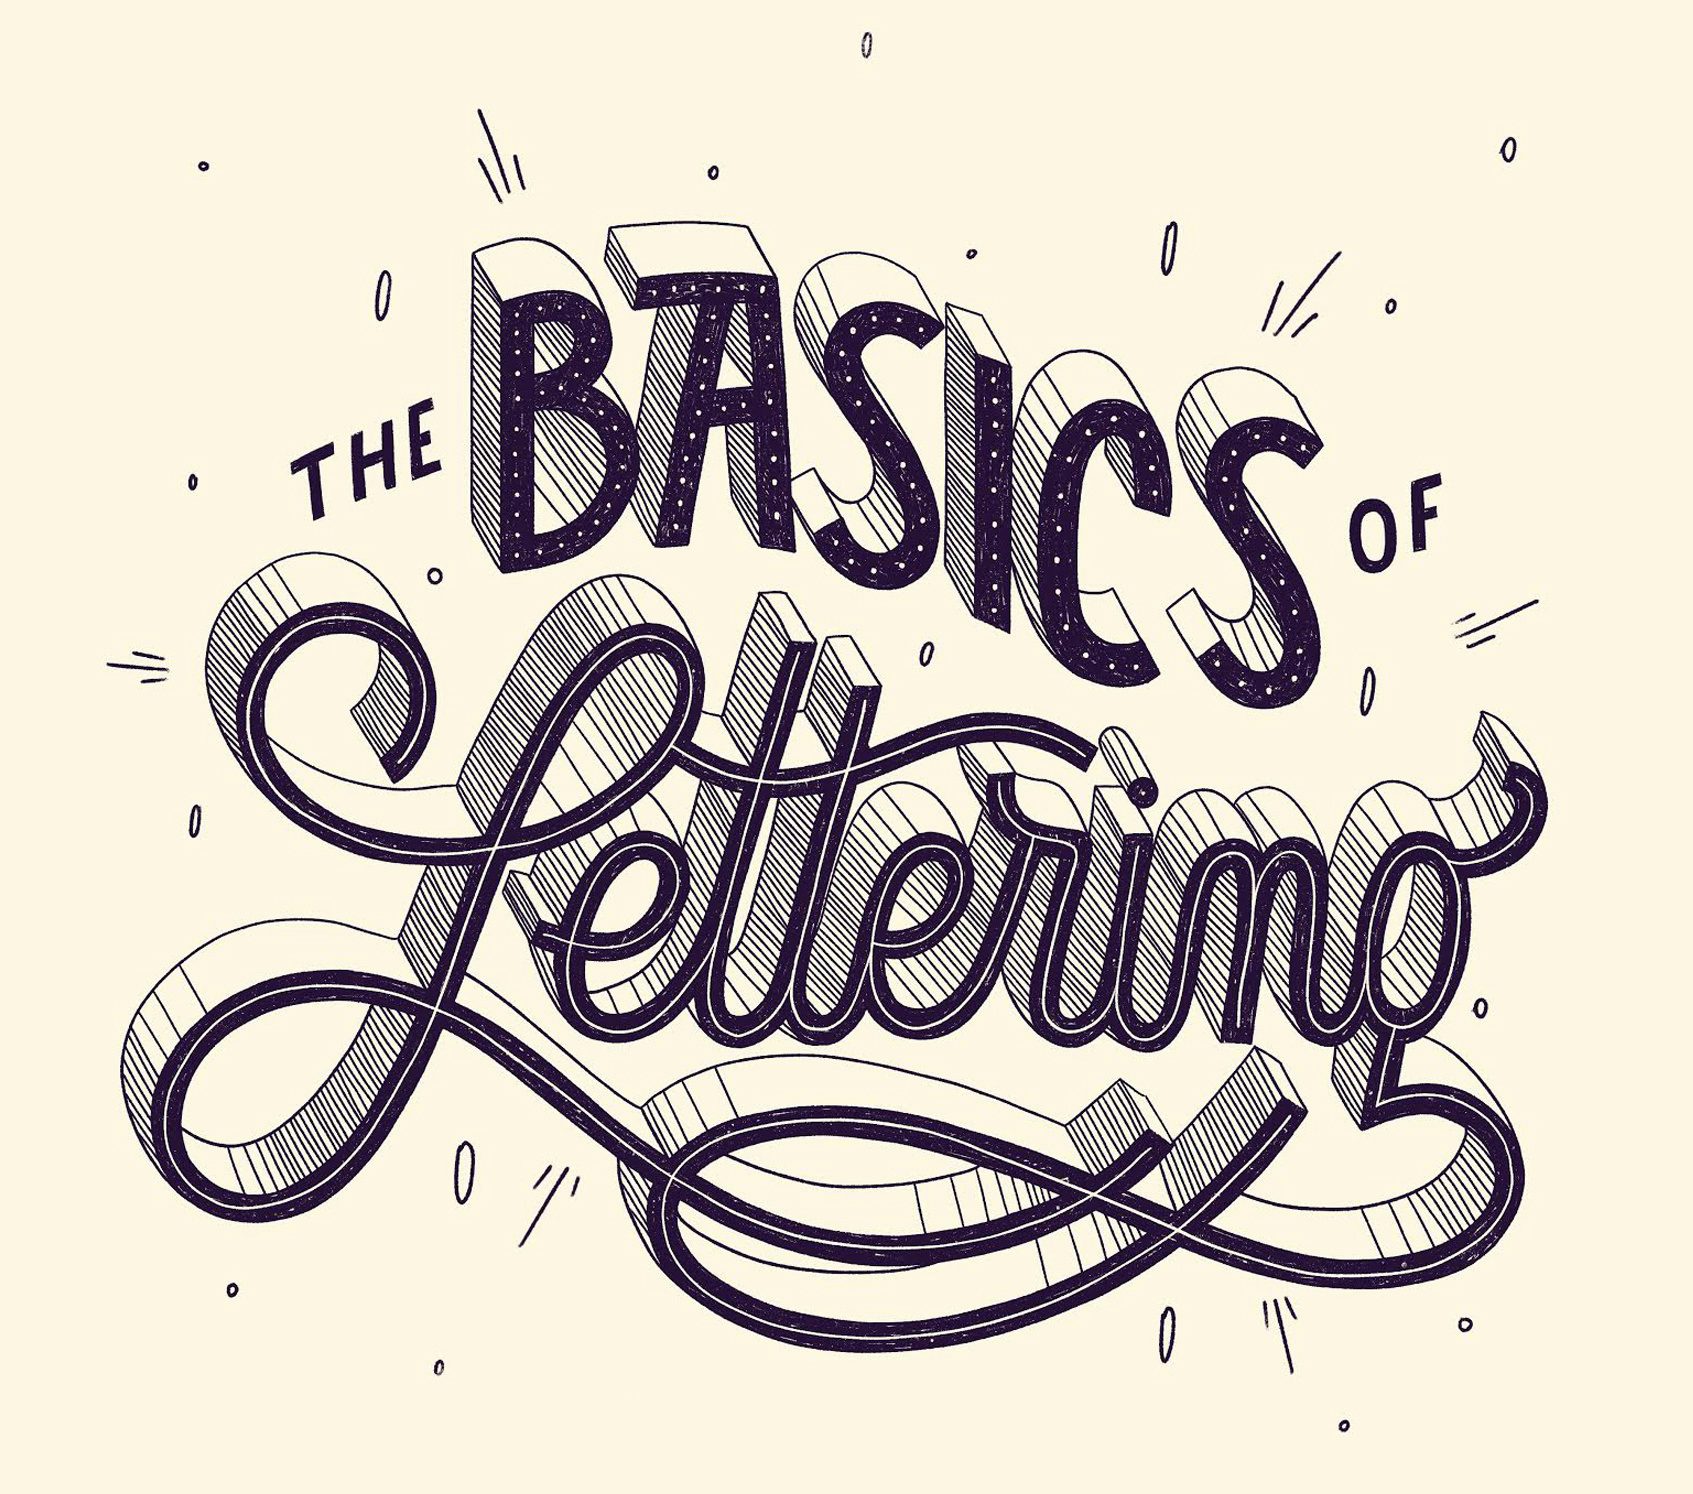 Brush lettering workbook (templates & exercises to learn brush lettering)